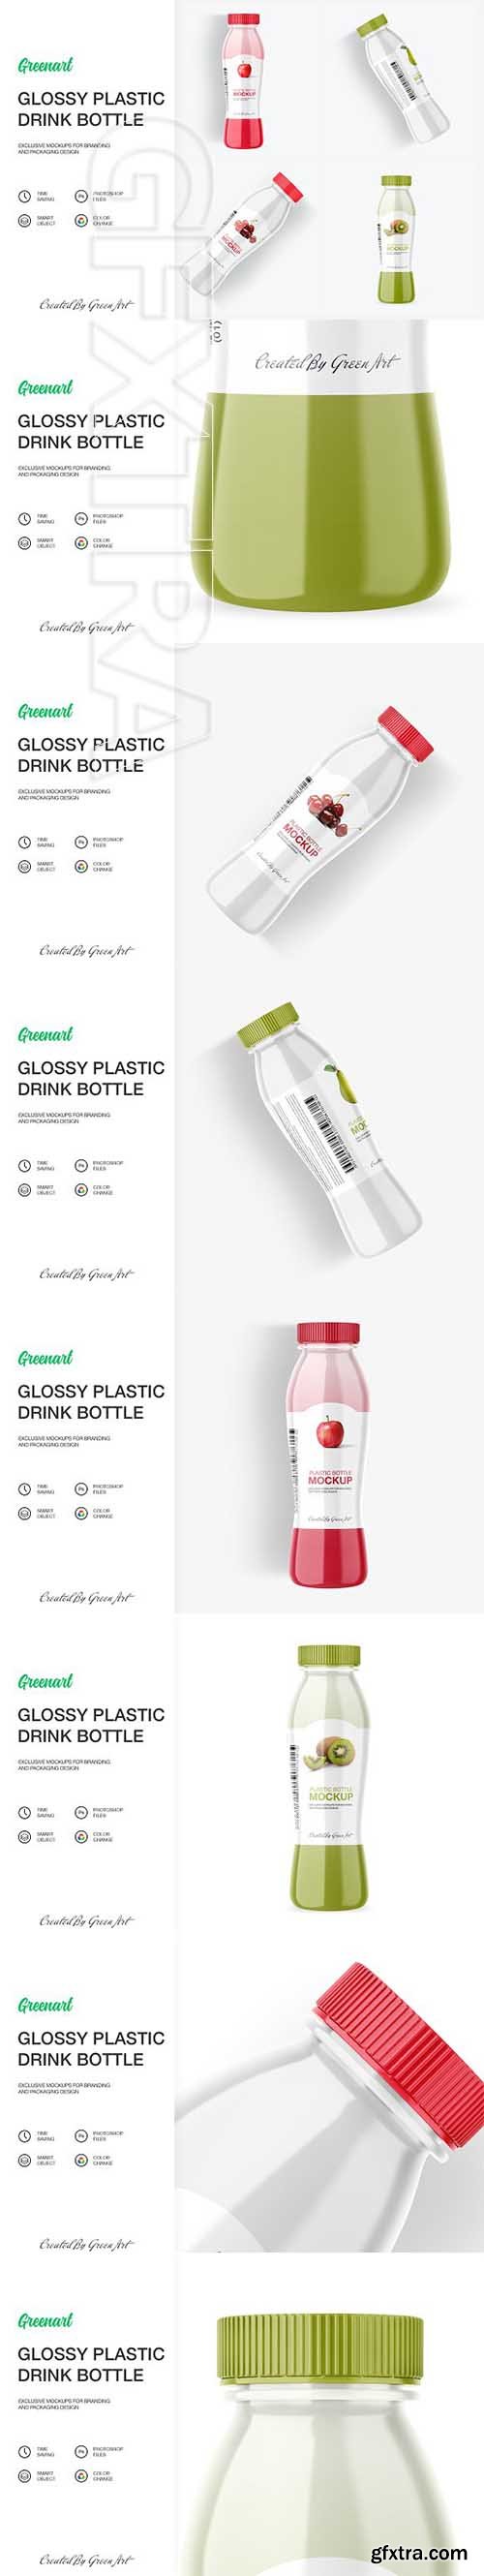 CreativeMarket - Glossy Plastic Bottle Mockup 2415105